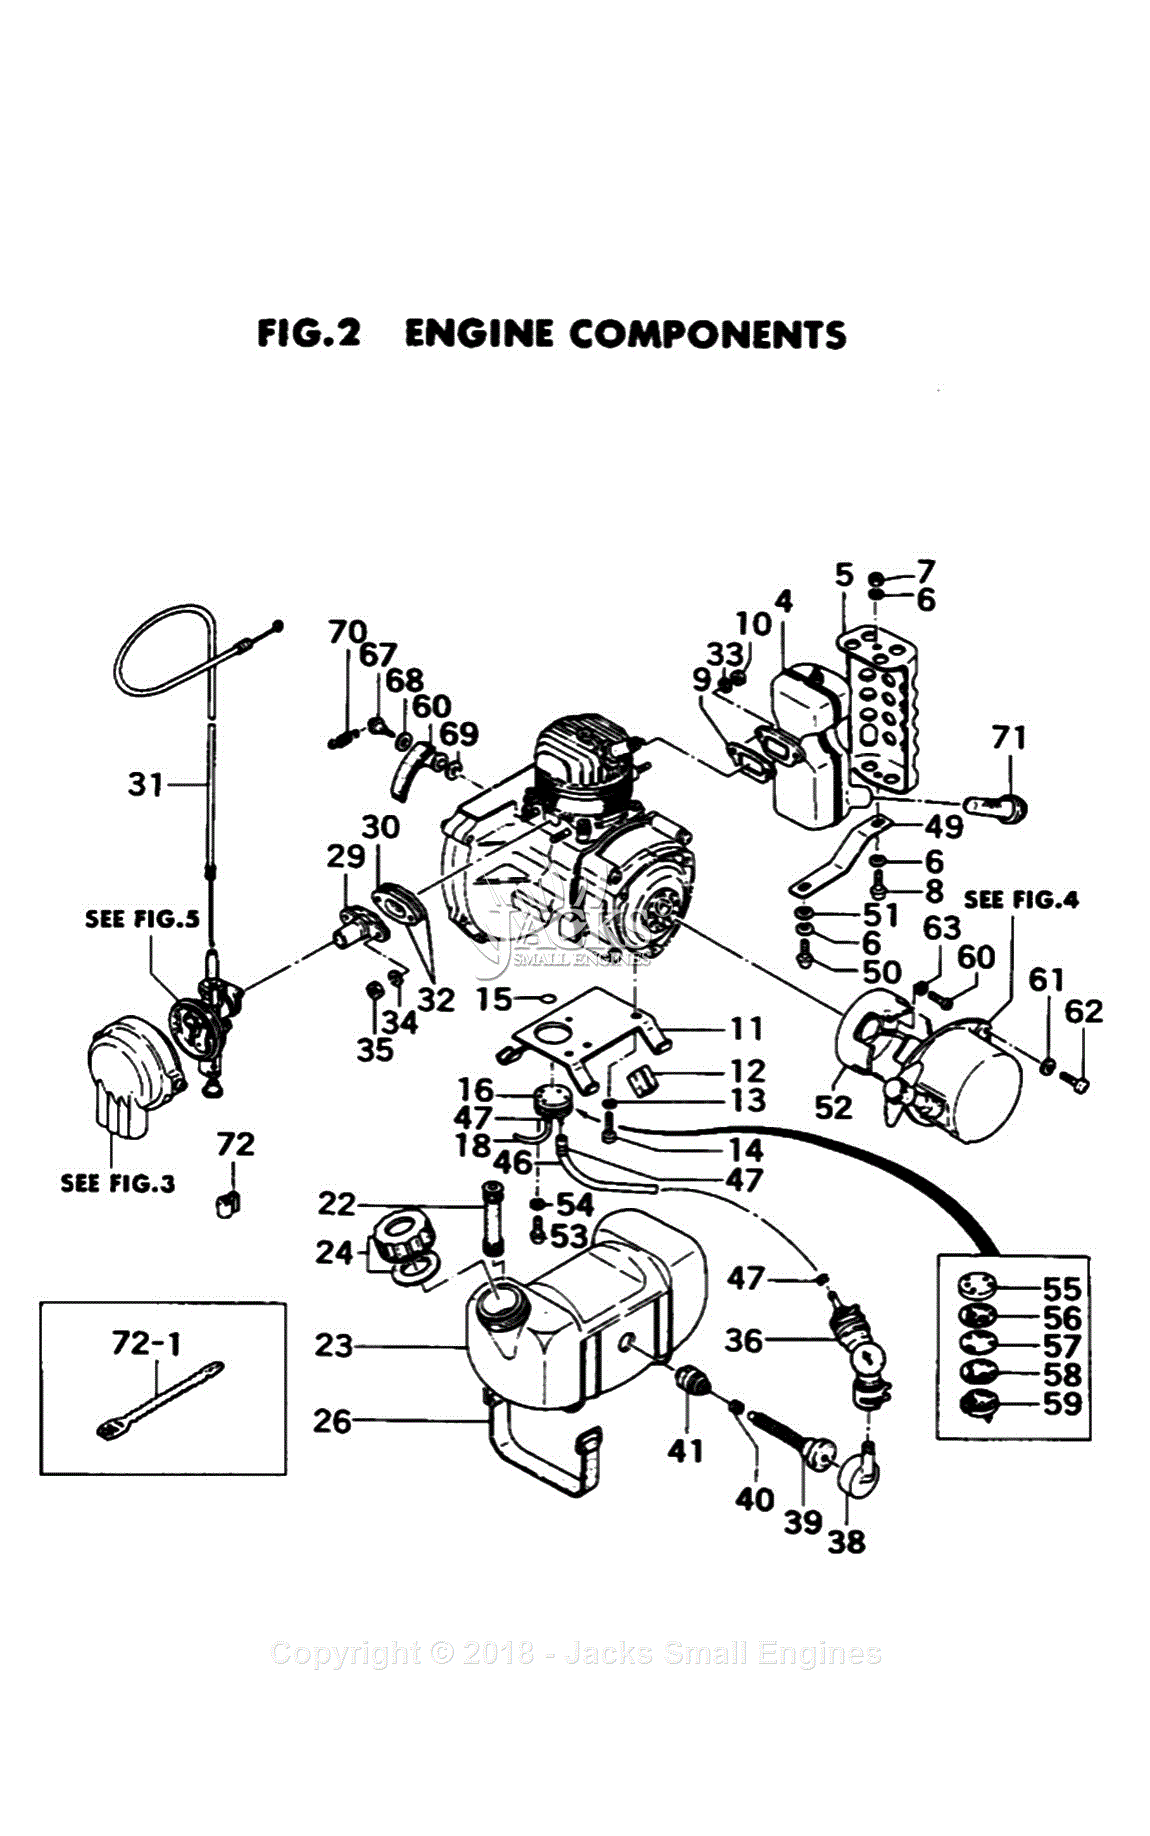 Basic Engine Component Diagram